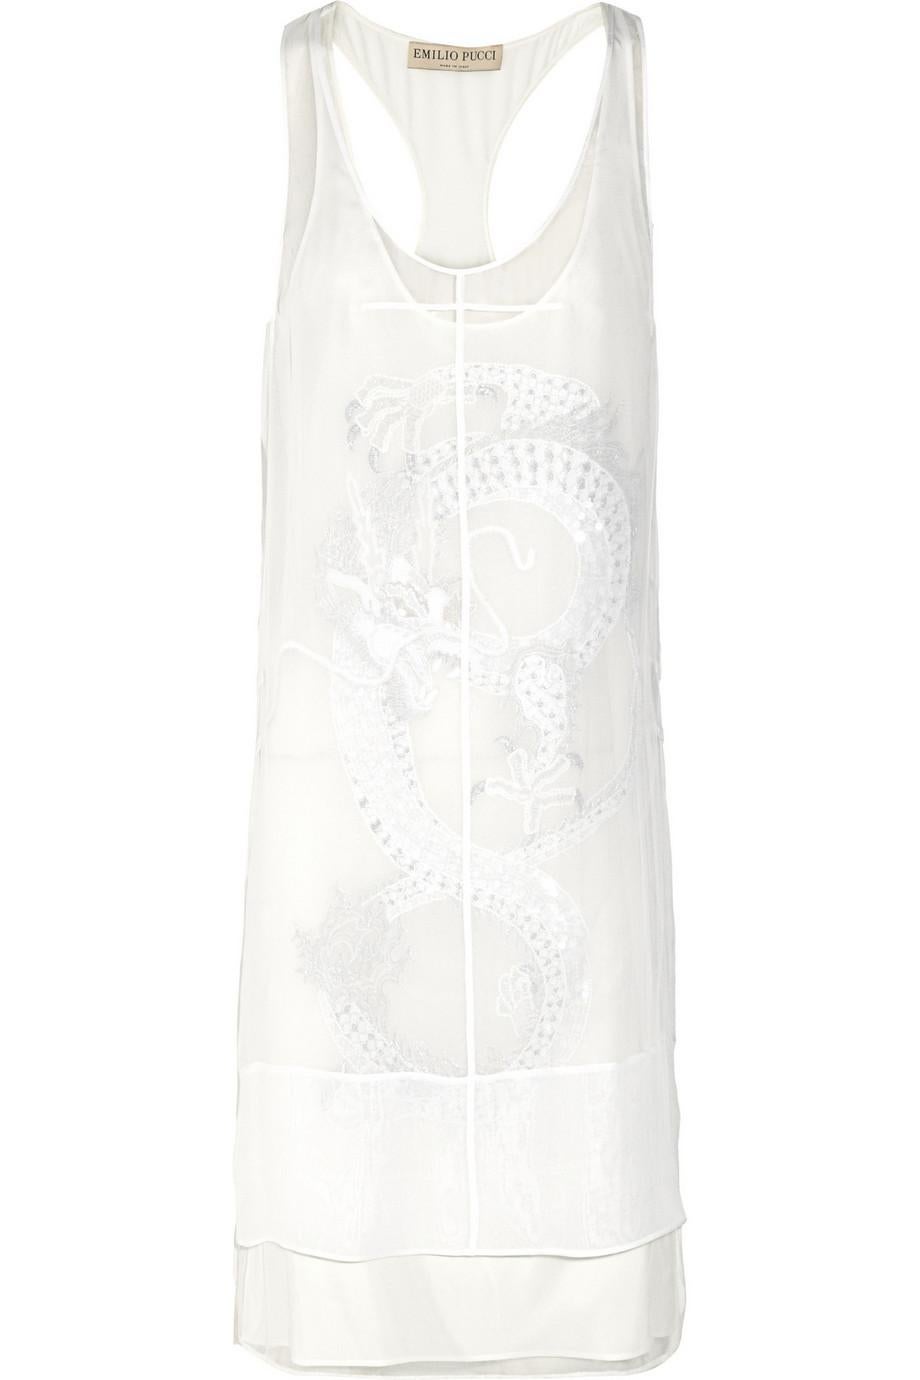 UNWORN Emilio Pucci Peter Dundas Dragon Embroidery Overlay Silk Dress Bridal 40 For Sale 1